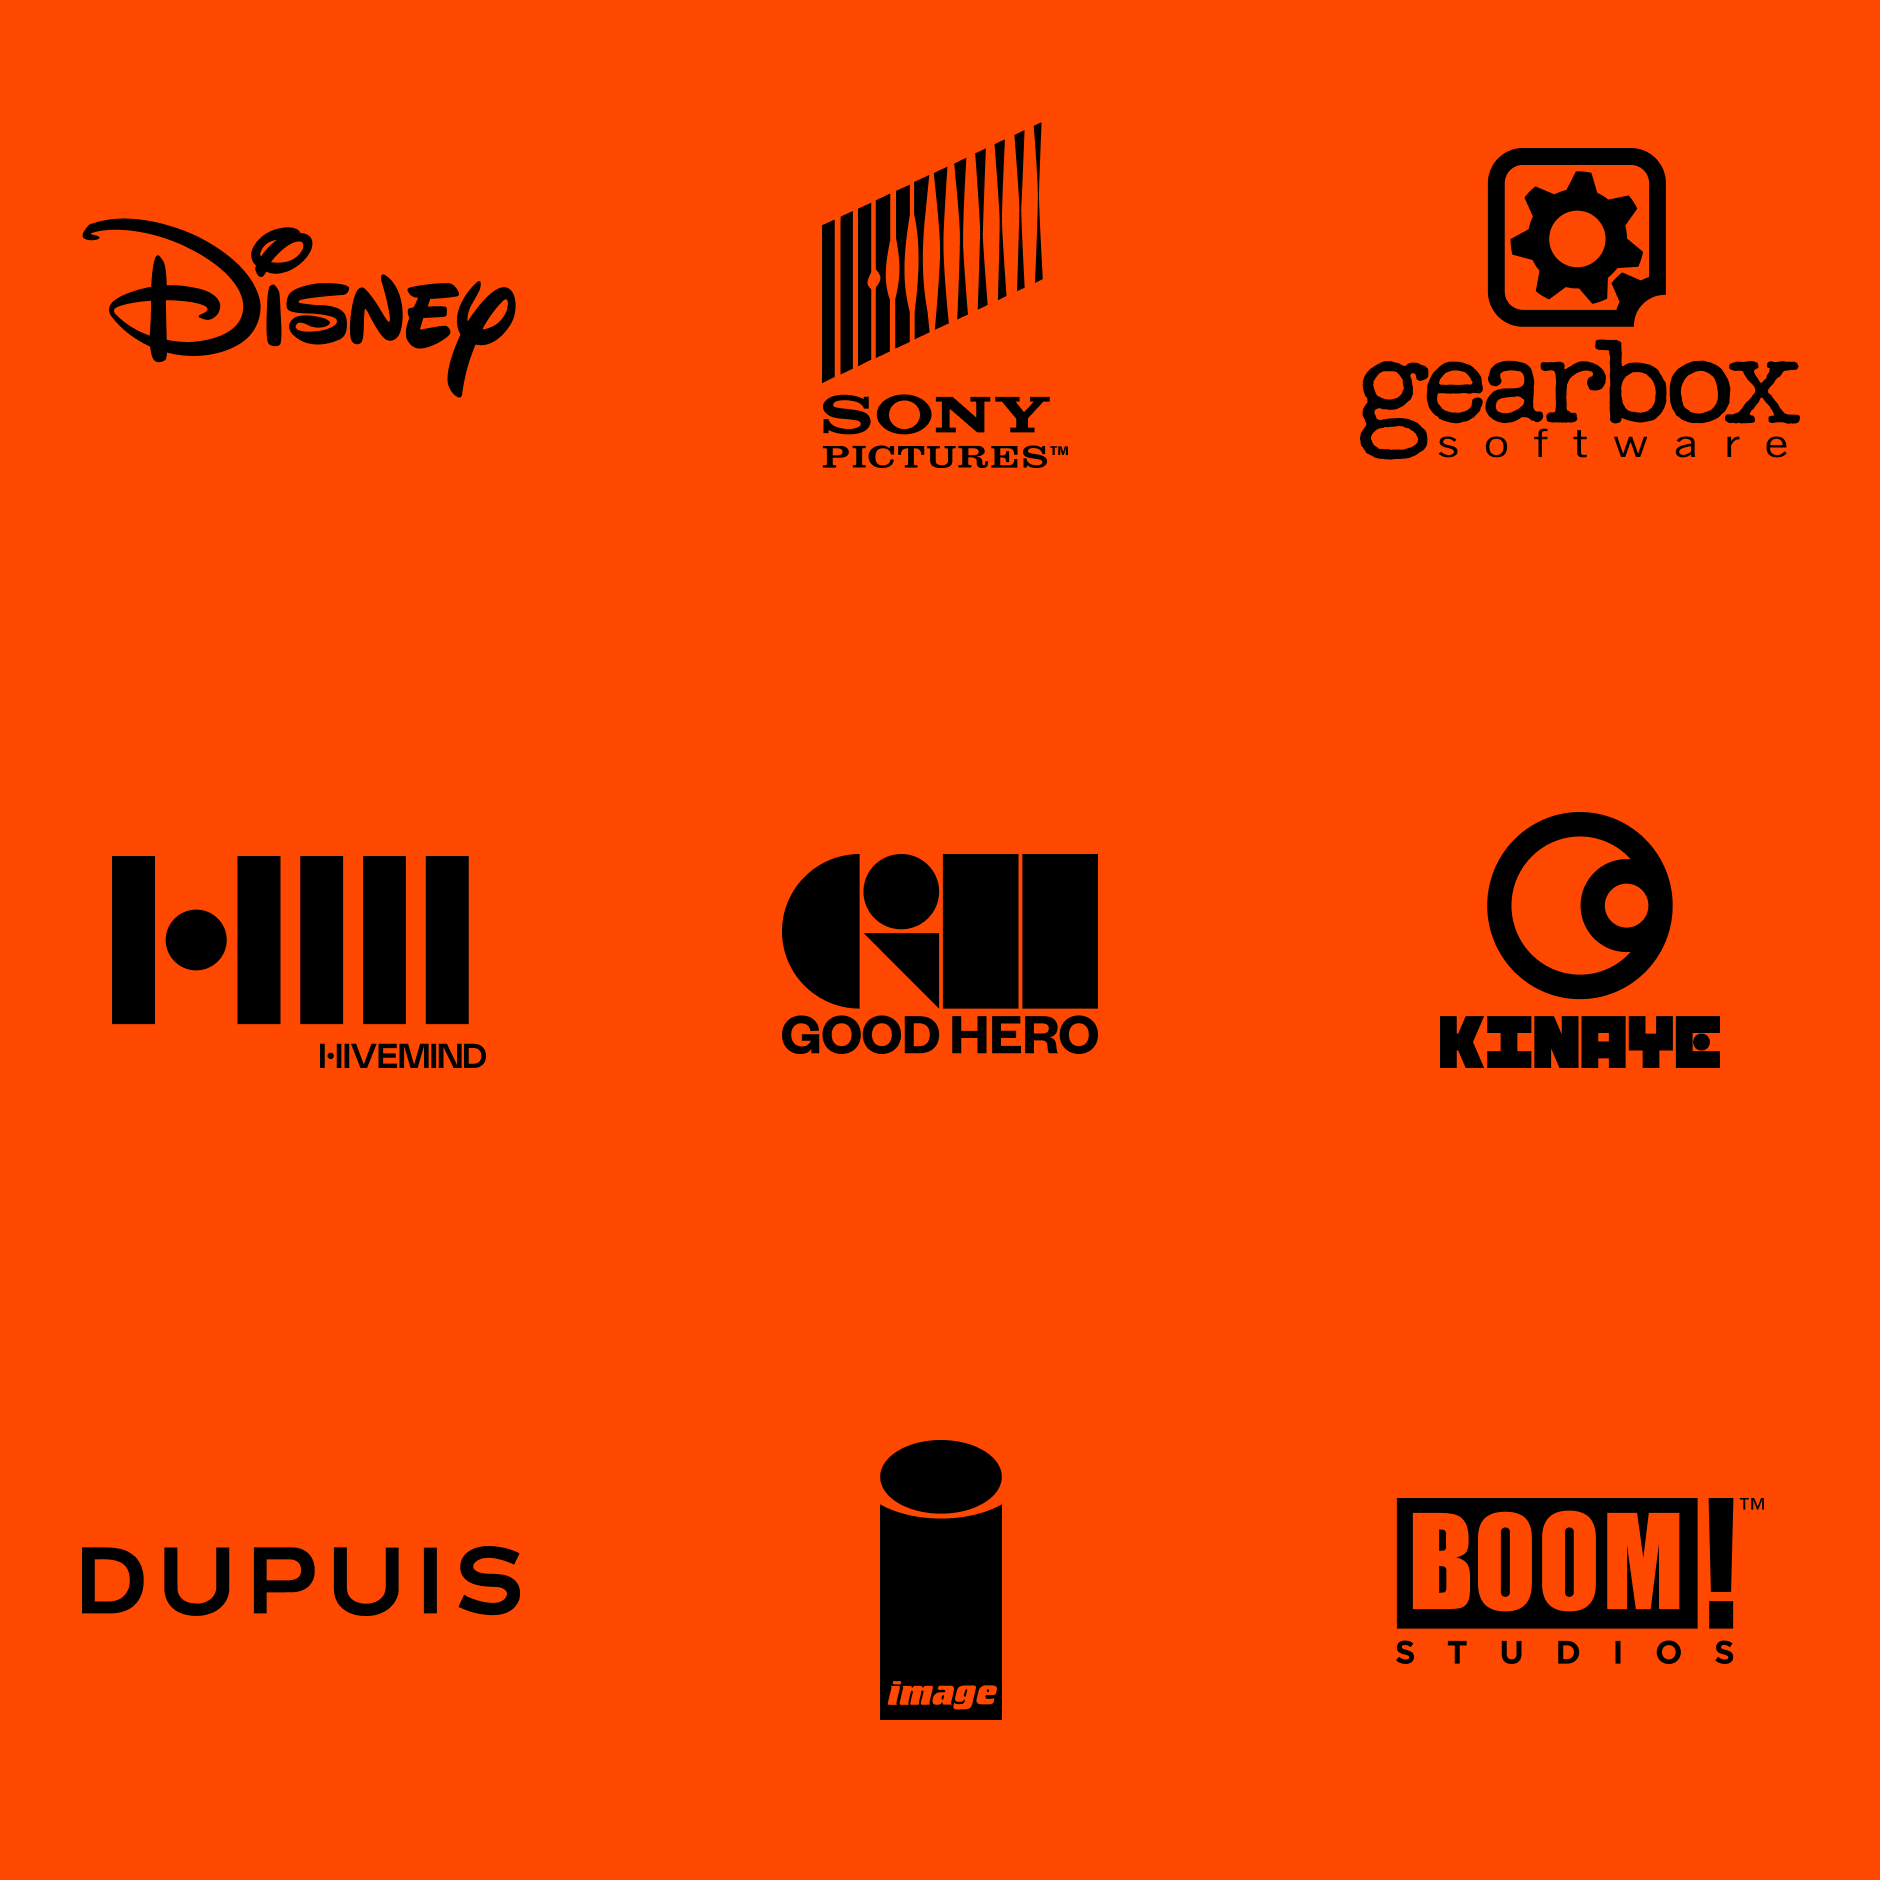 A grid of client logos including Disney